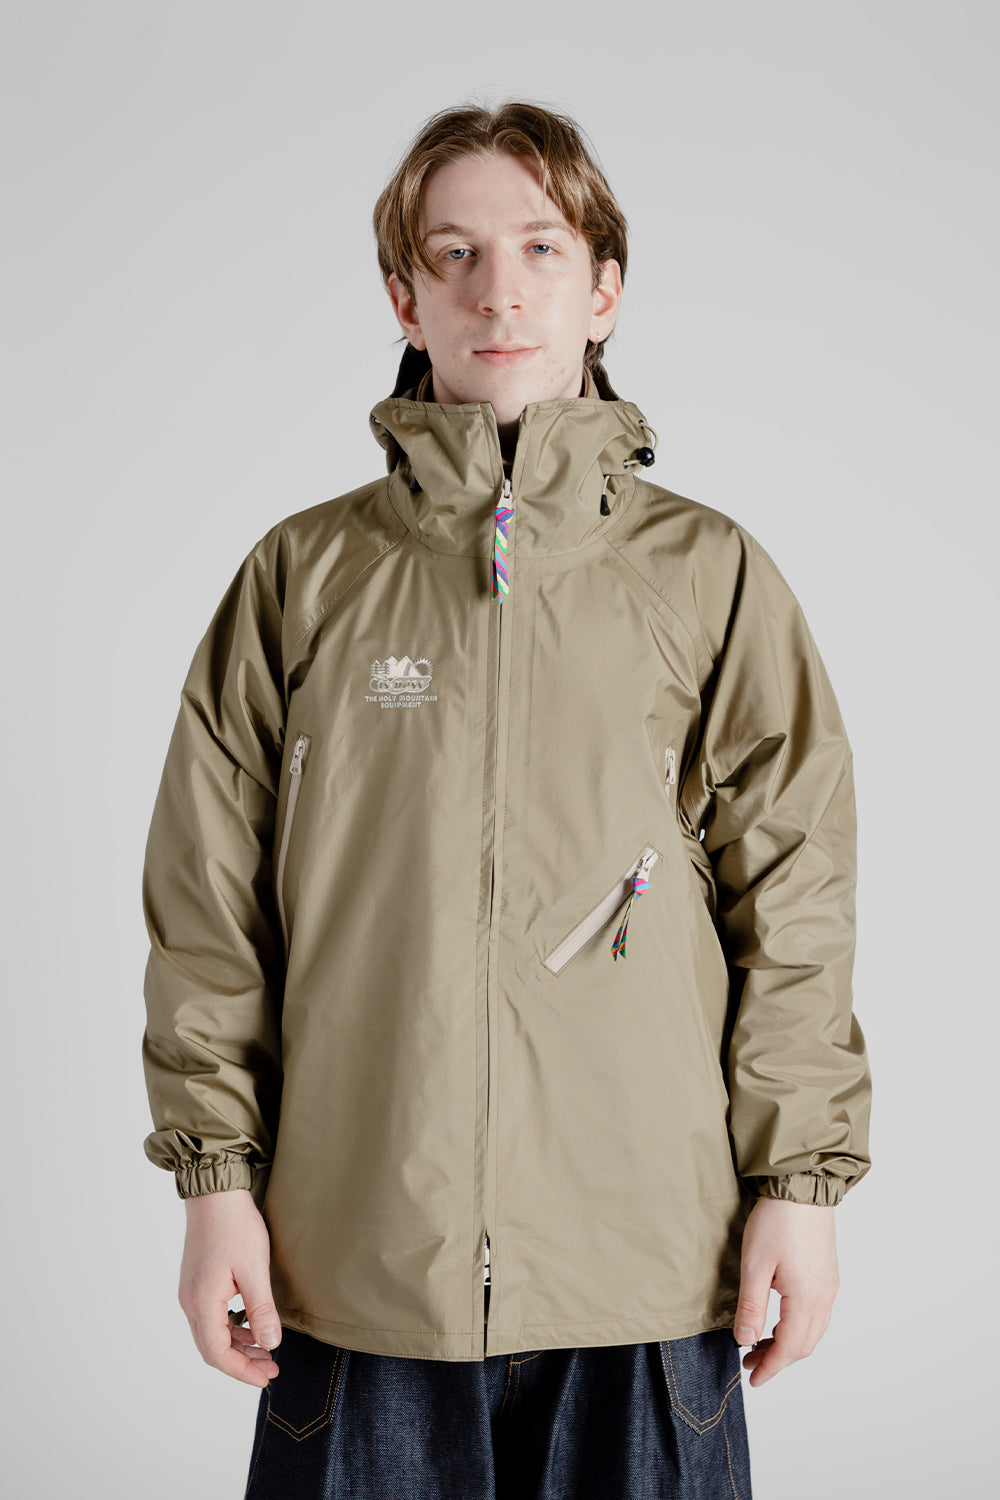 Facconable zipper jacket size small in EUC